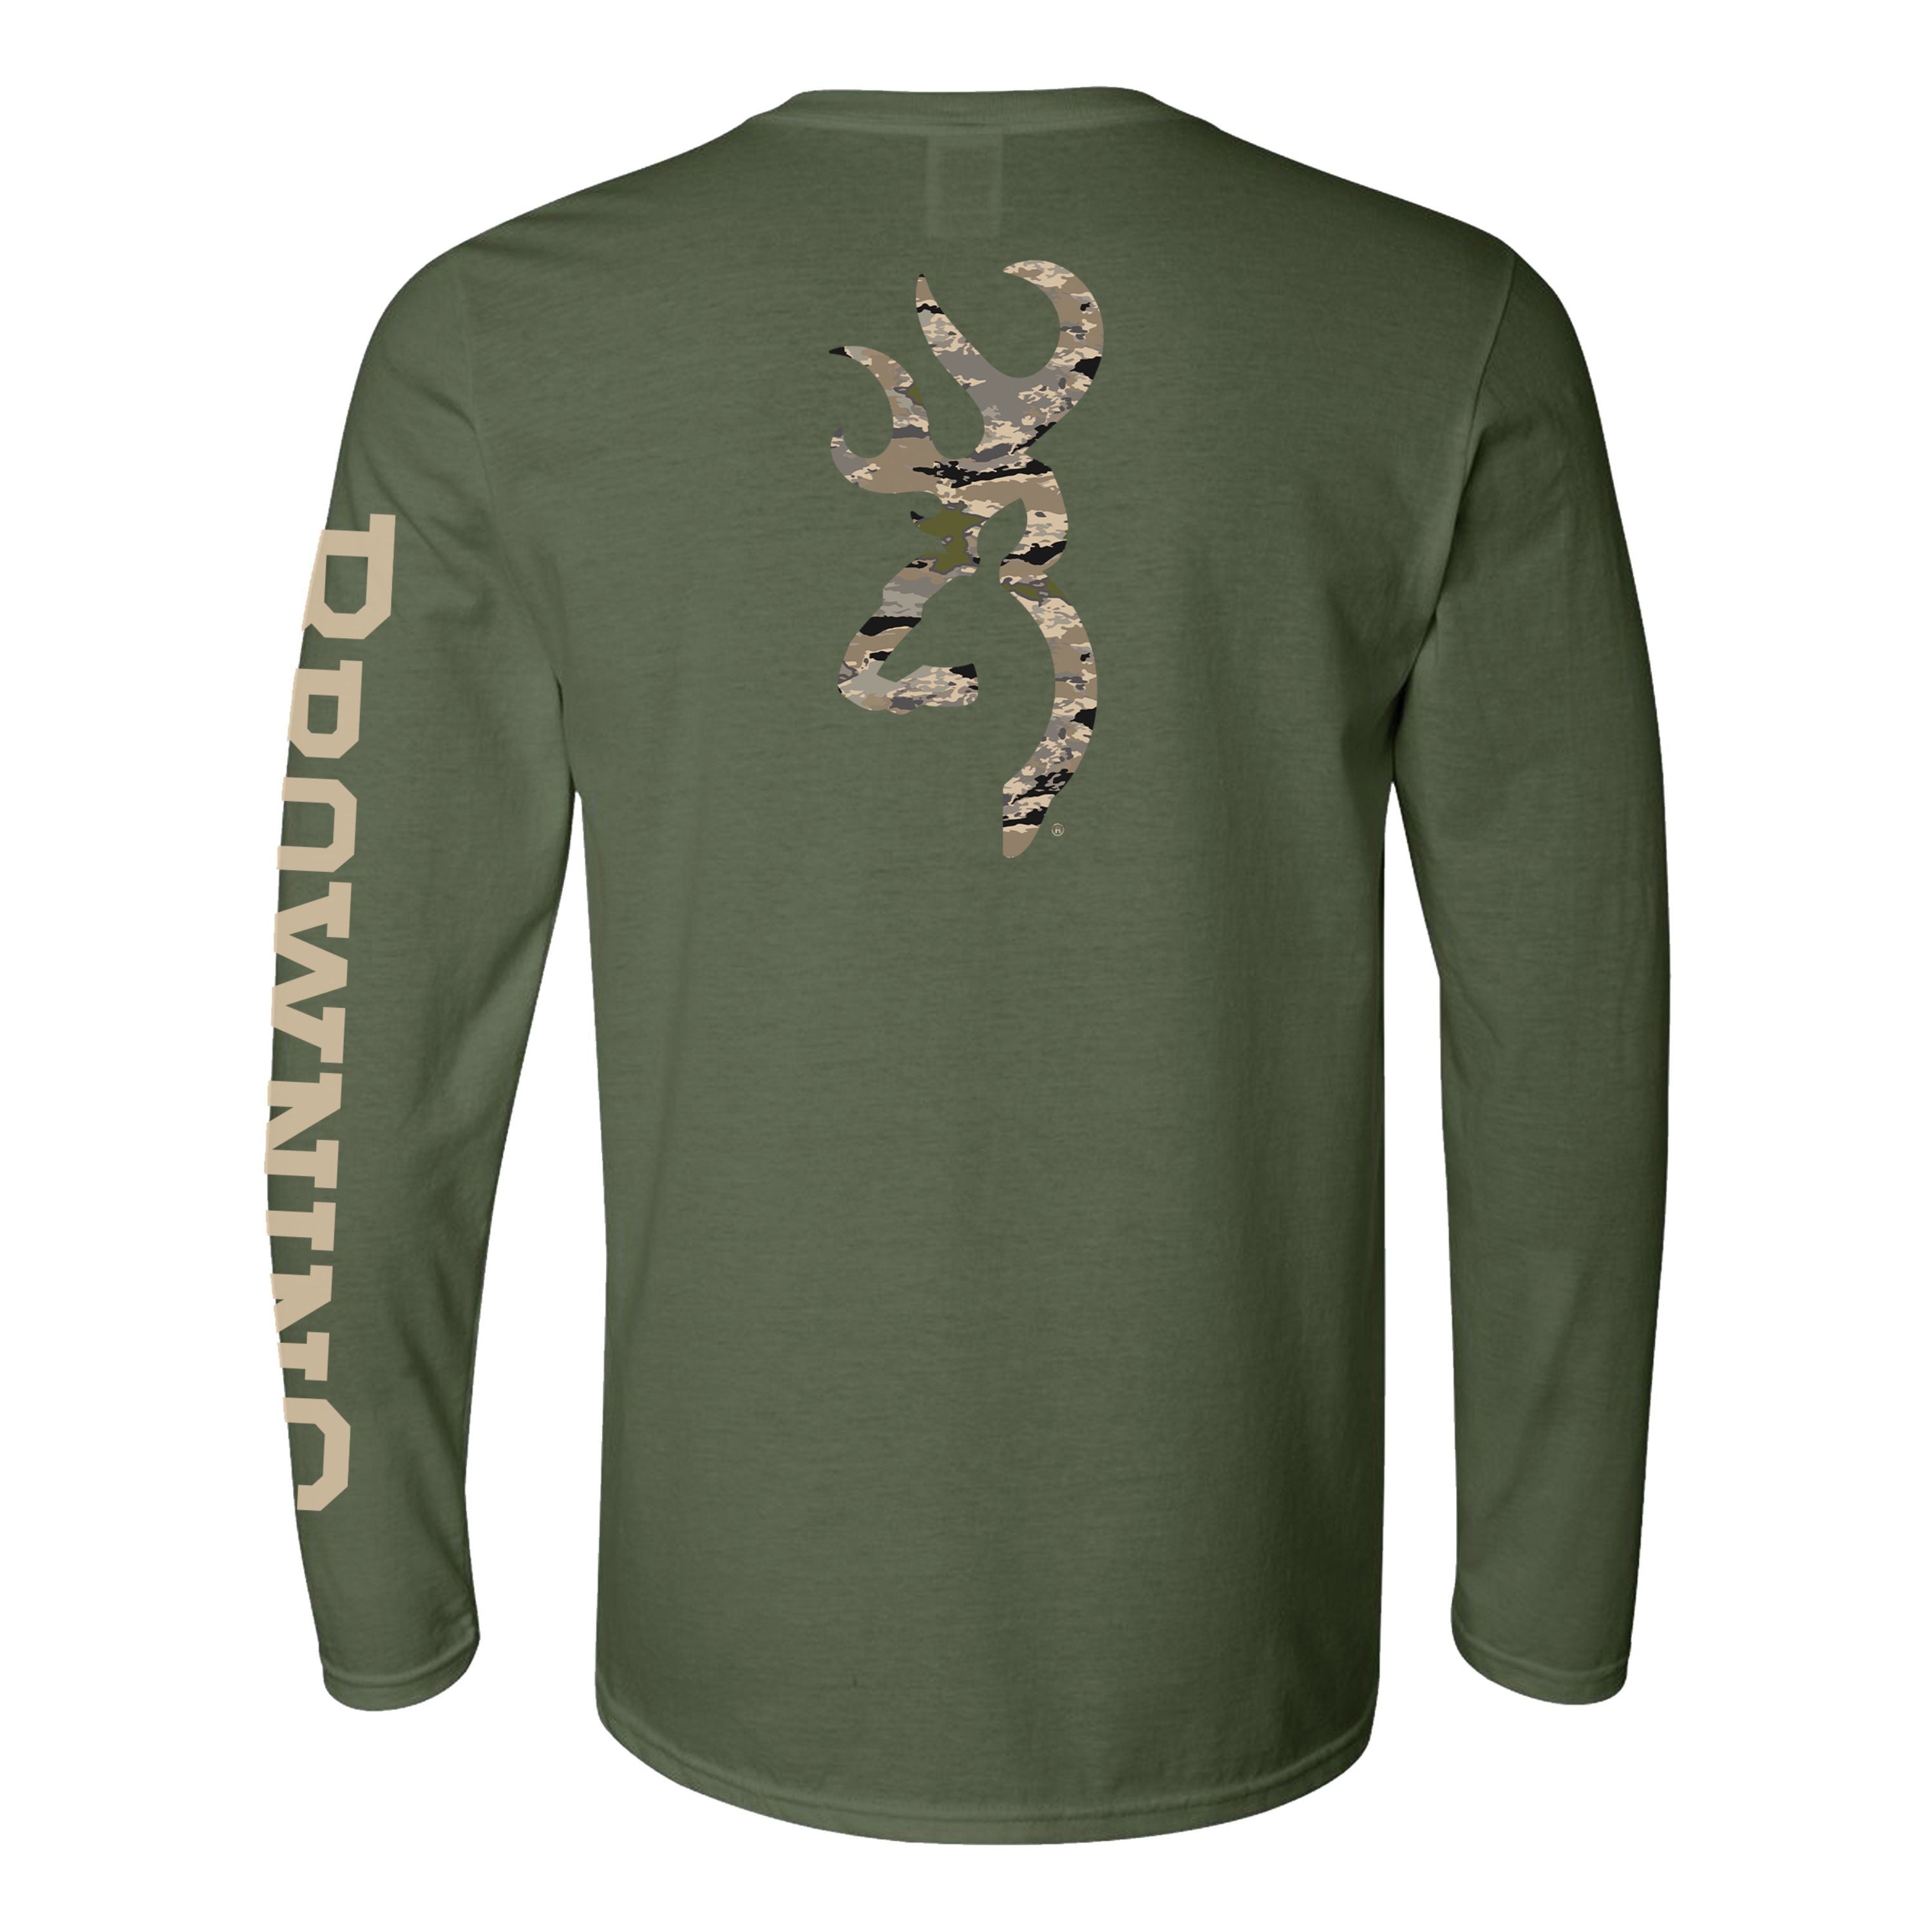 "Buckmark" Long sleeves T-shirt - Men's